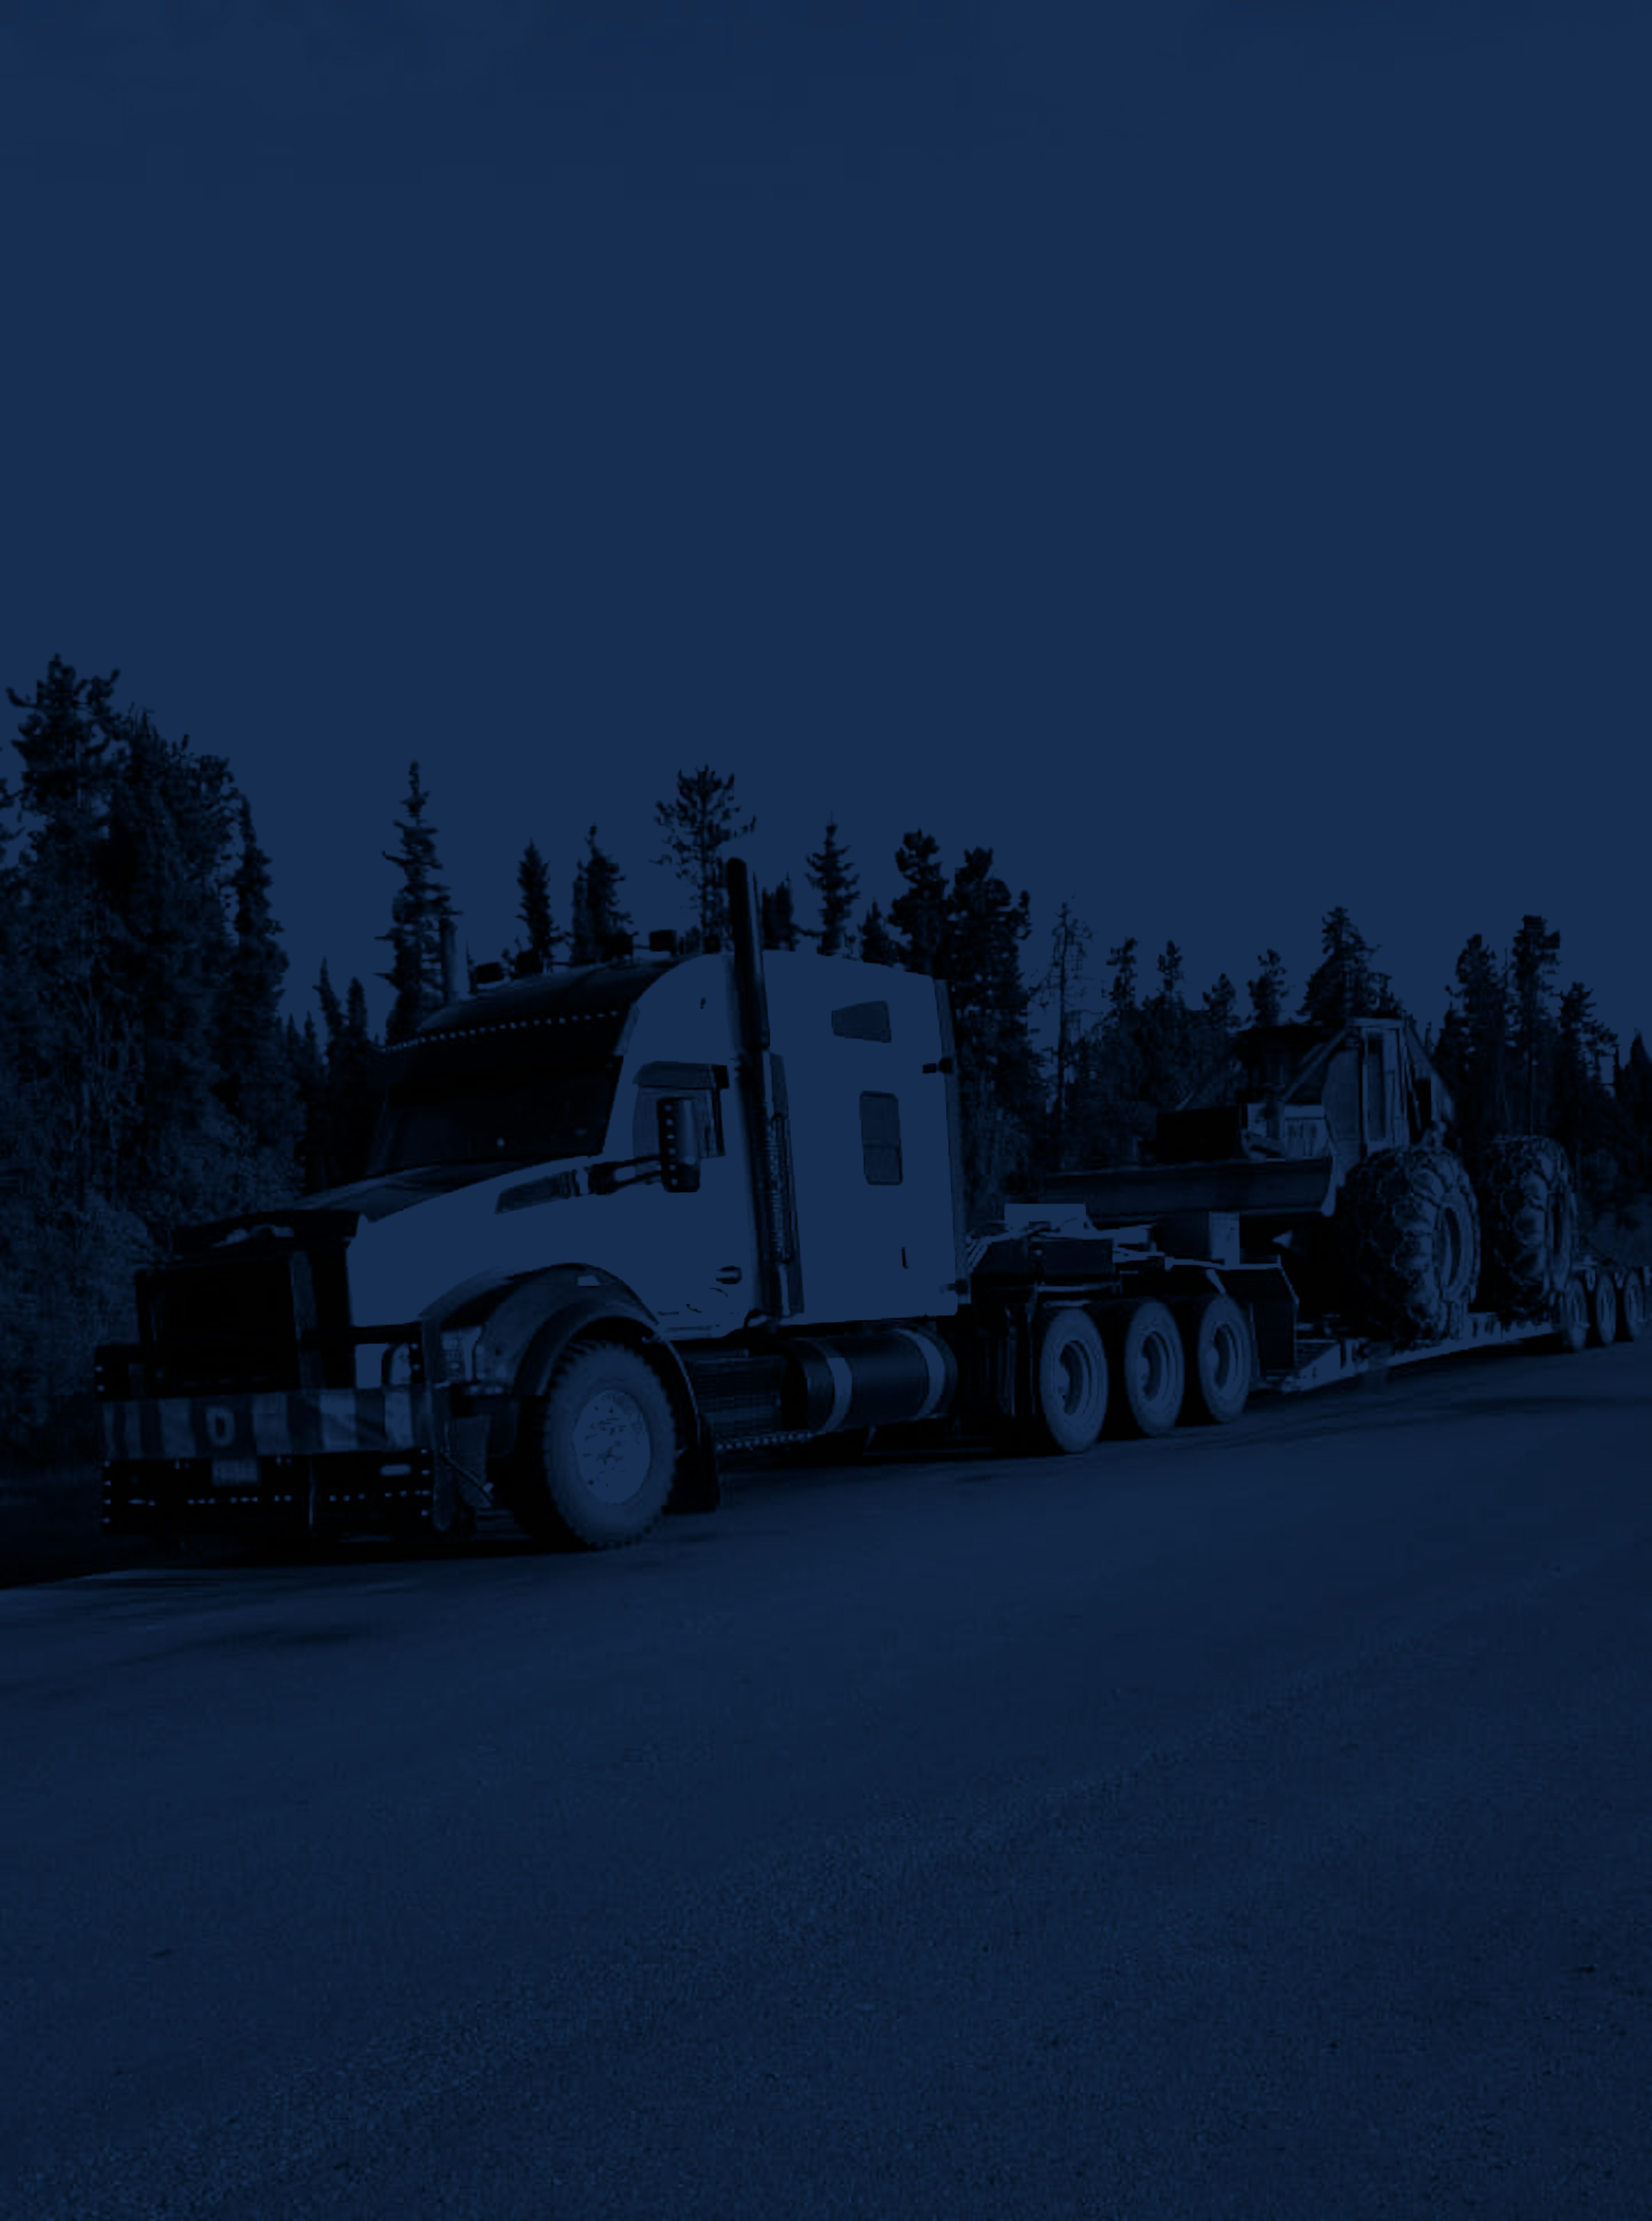 Peaceland truck hauling logging equipment